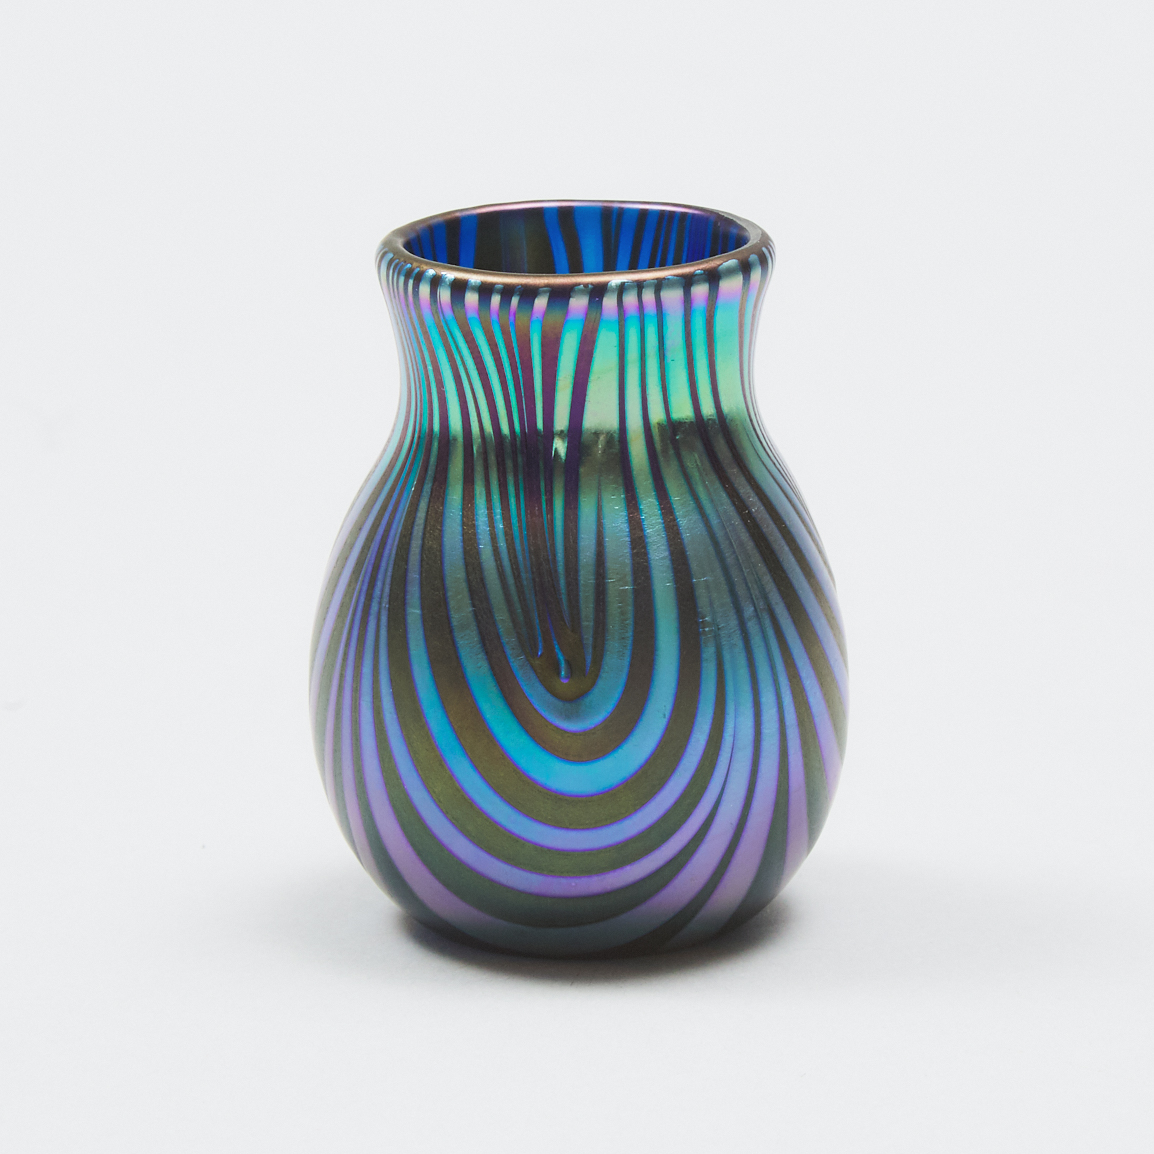 Charles Lotton (American, b.1935), Miniature Iridescent Glass Vase, 2010